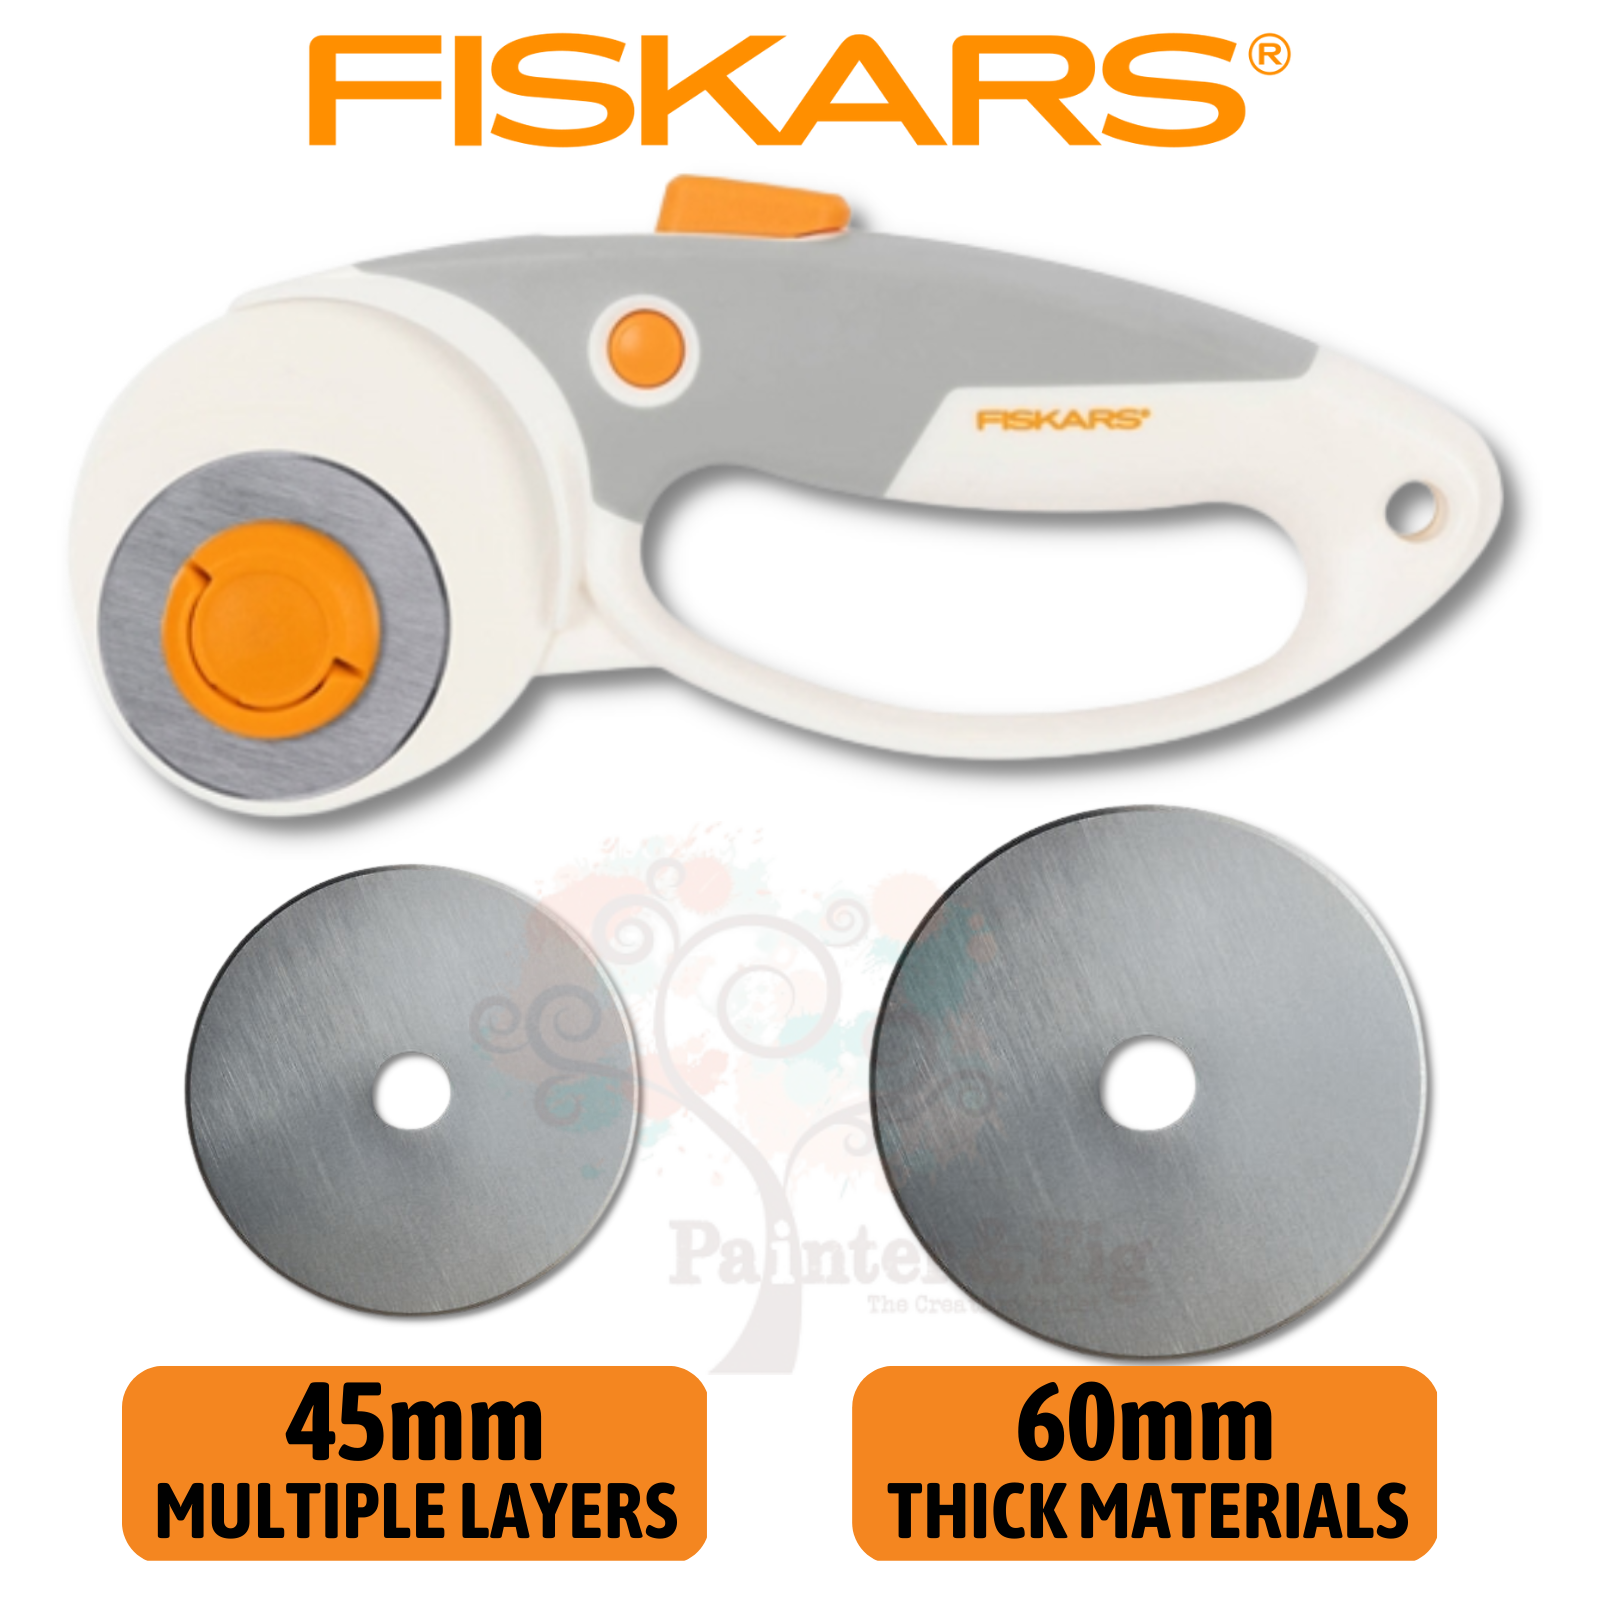 Fiskars 45 mm, 60 mm Rotary Cutter Blade, Easy Change DuoLoop - High-grade, precision-ground, premium steel blades